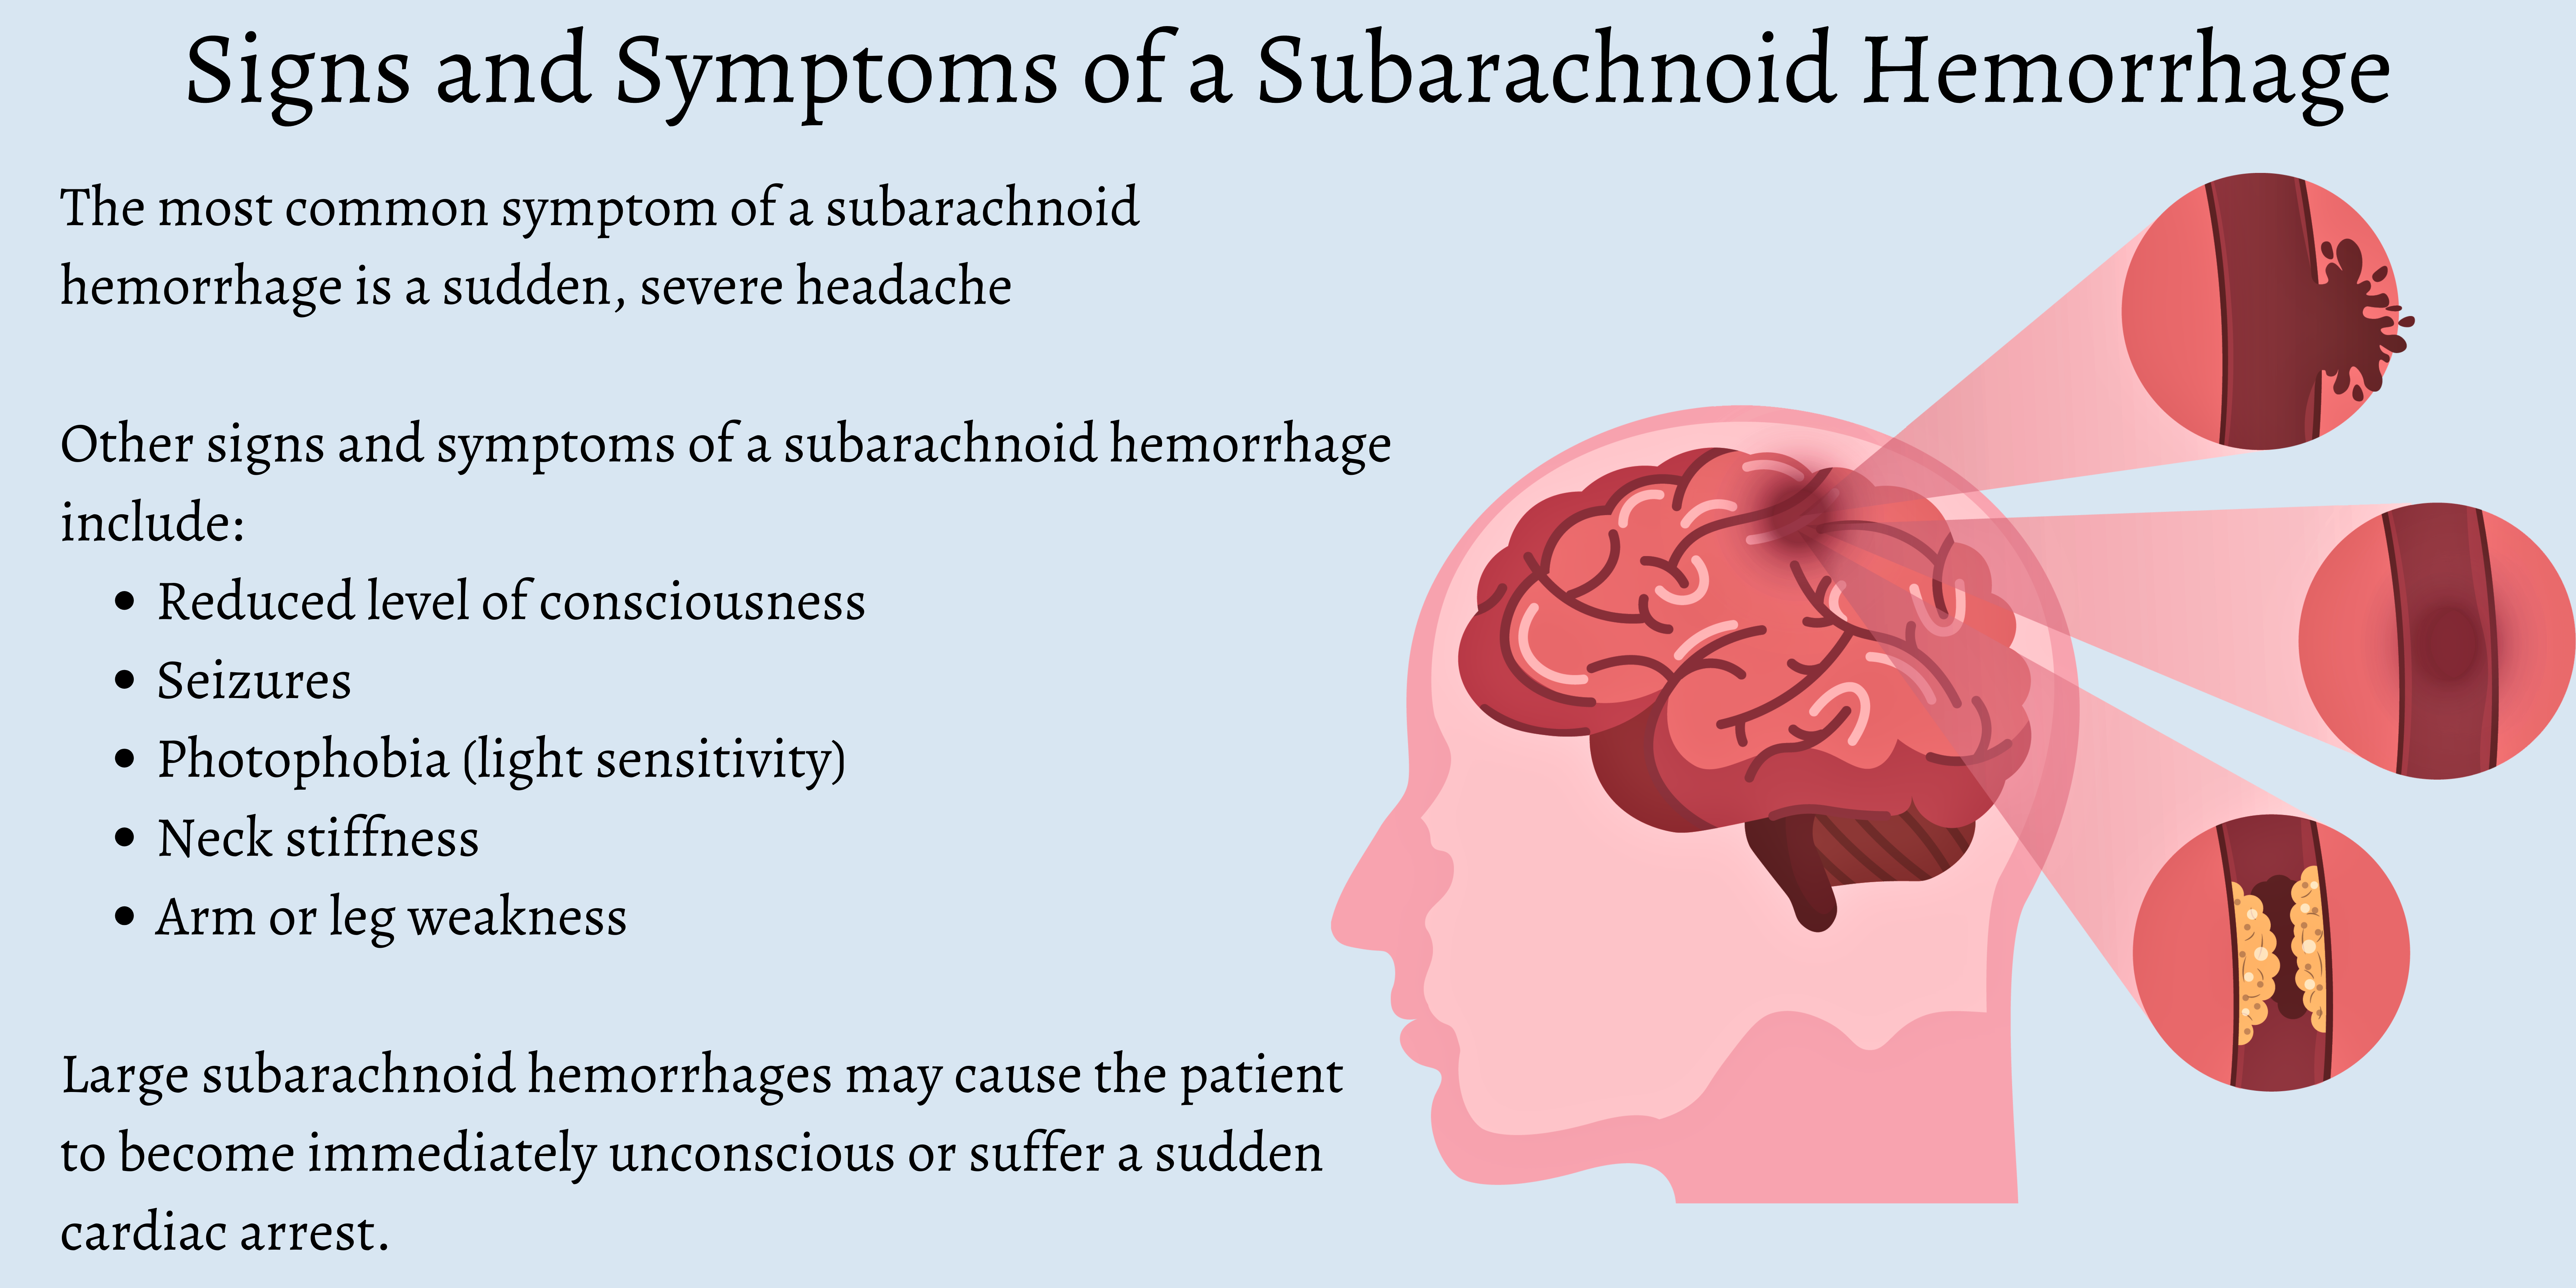 Subarachnoid Hemorrhage Symptoms & Treatment